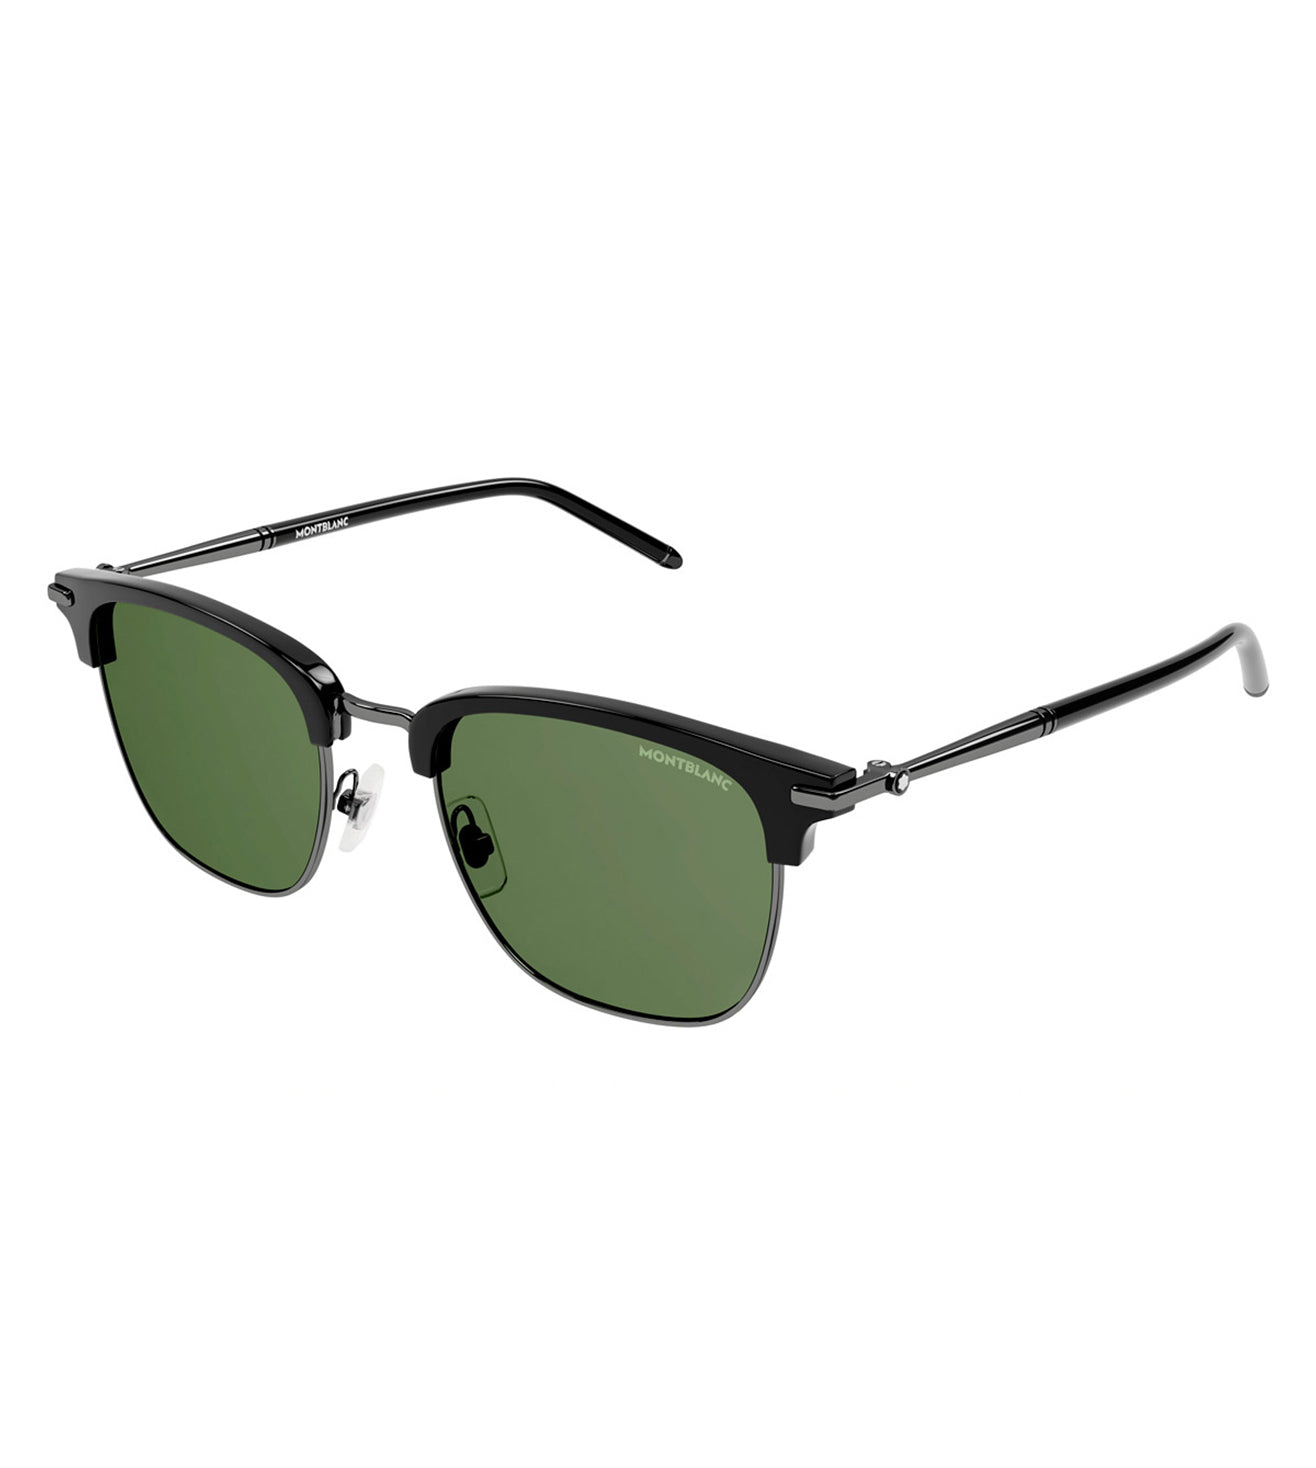 Montblanc Men's Green Square Sunglasses